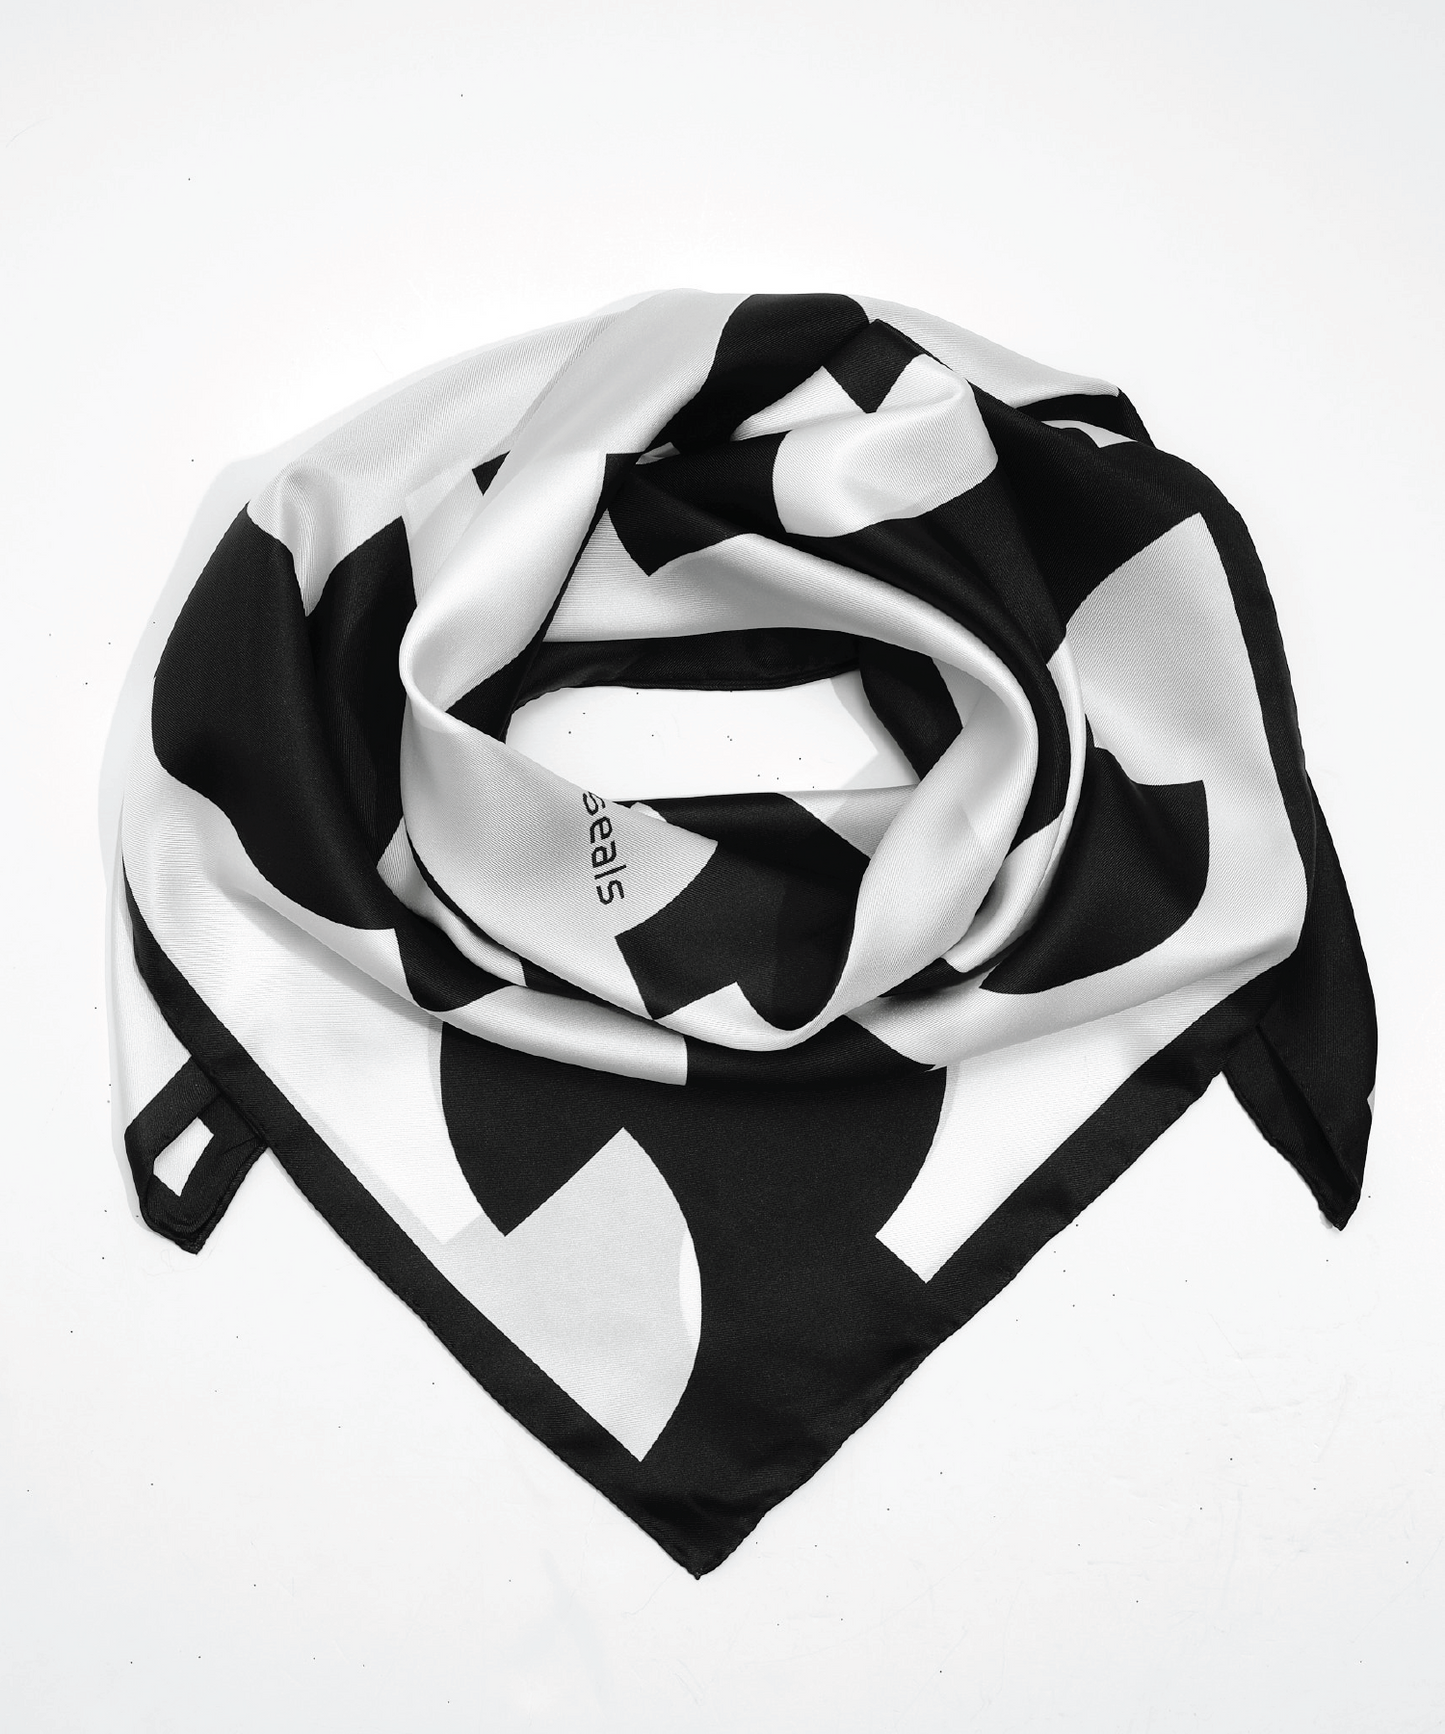 Echo100 scarf designed by Tré Seals